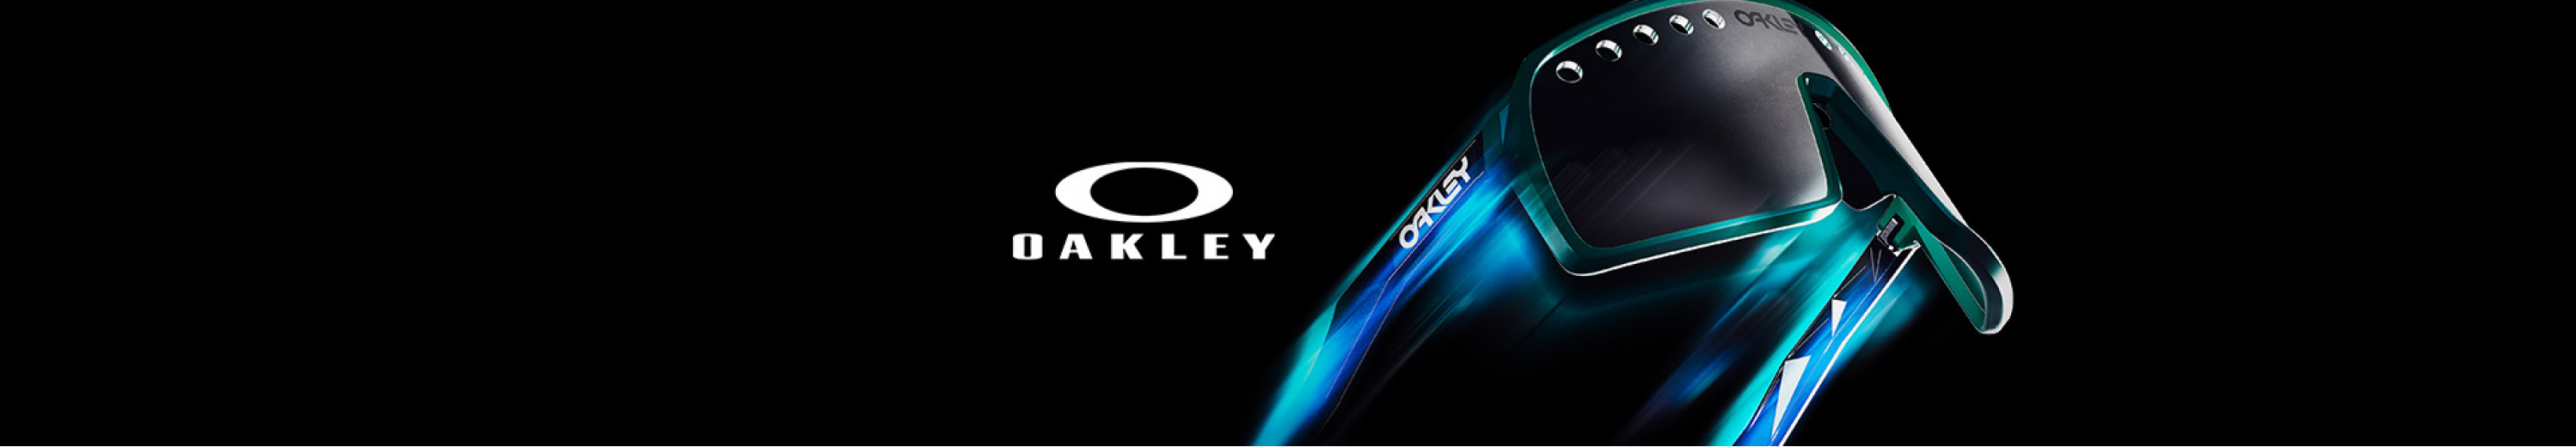 Oakley Origins Eyewear Collection